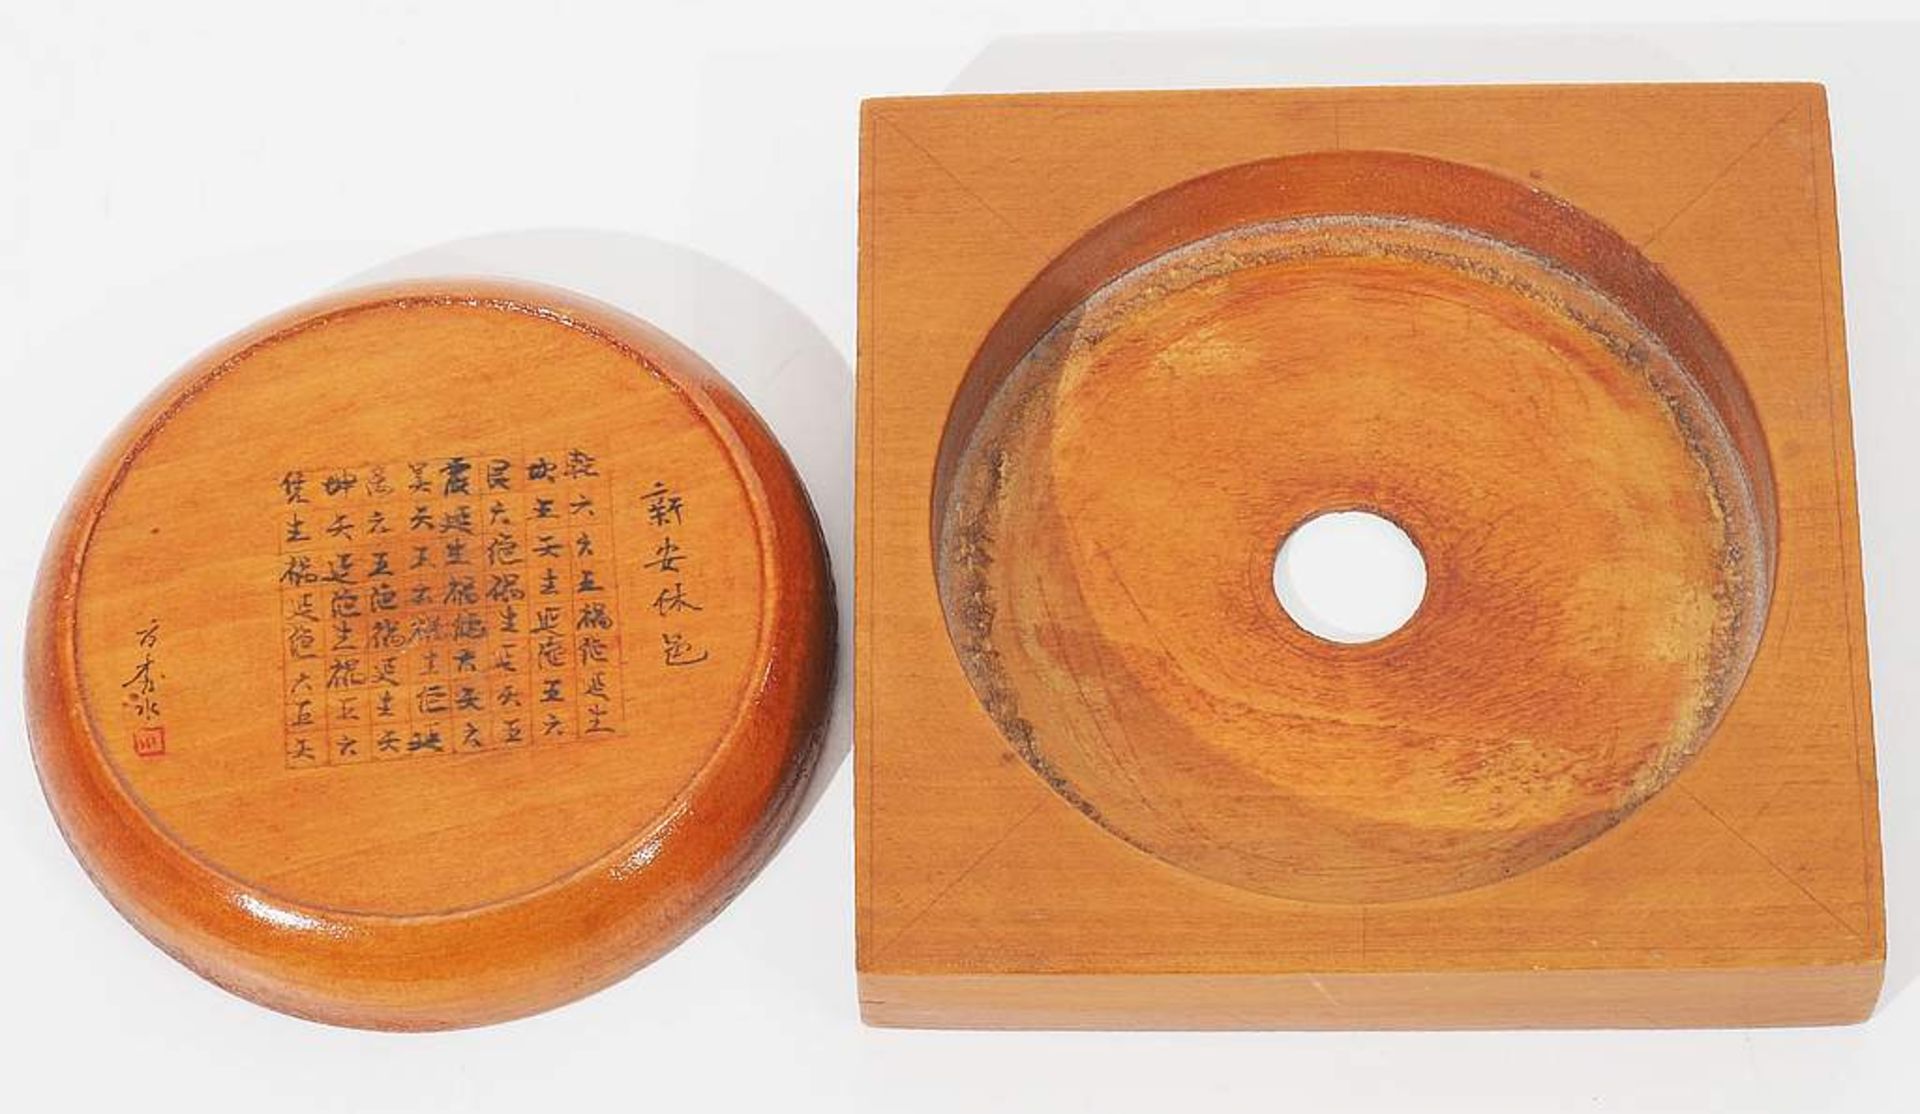 Feng Shui Kompass, China, wohl 19. Jahrhundert. Holzrahmen mit beweglichem Innenkreis, Höhe 2 cm - Image 5 of 5